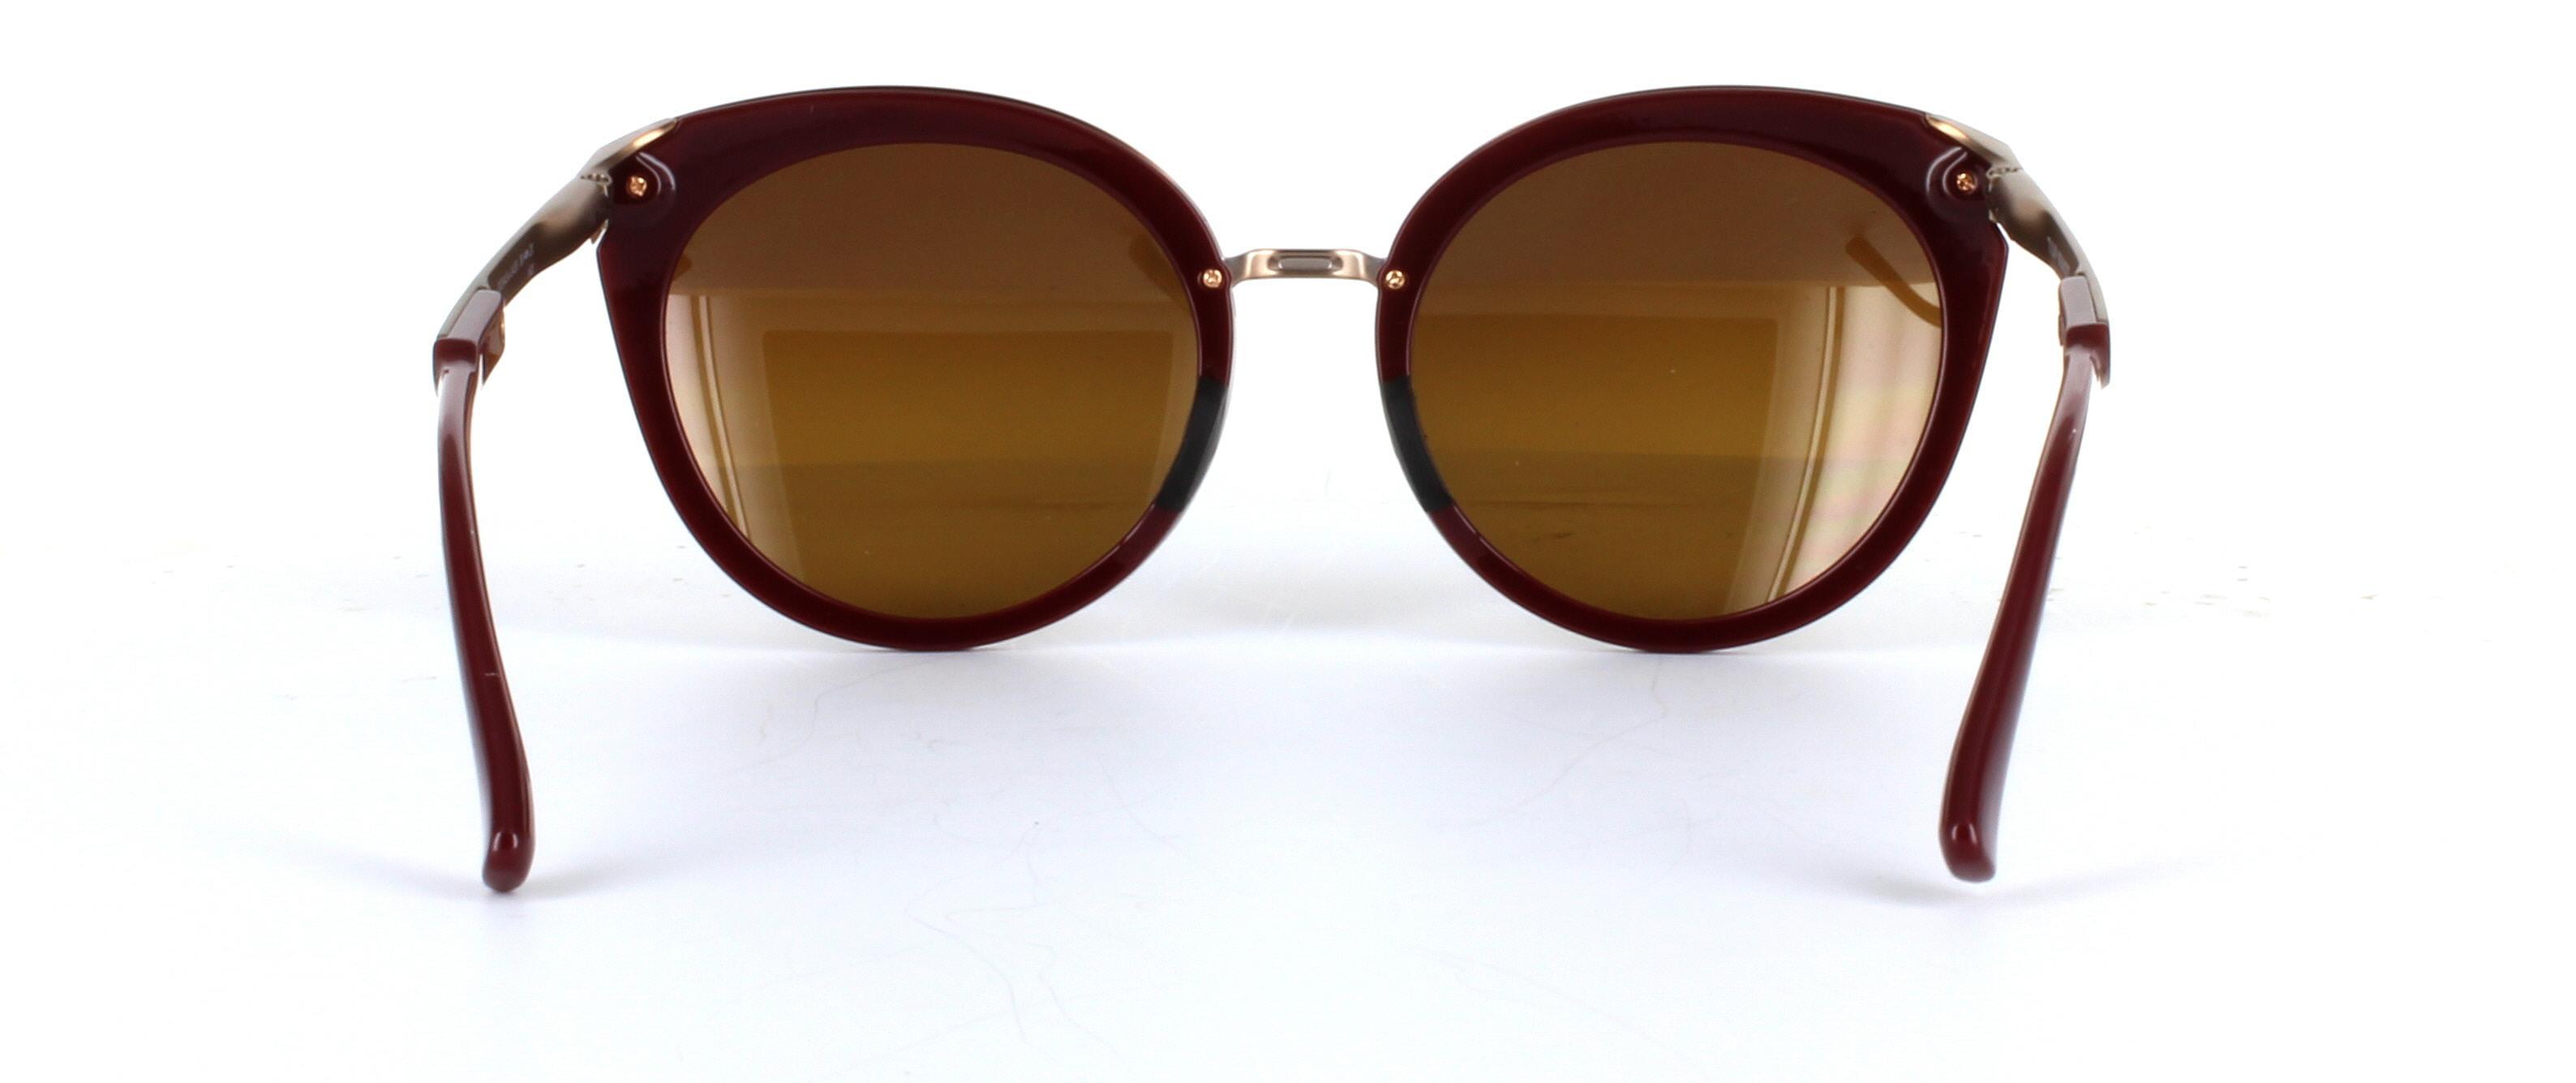 Oakley (O9434) Burgundy Full Rim Plastic Sunglasses - Image View 3